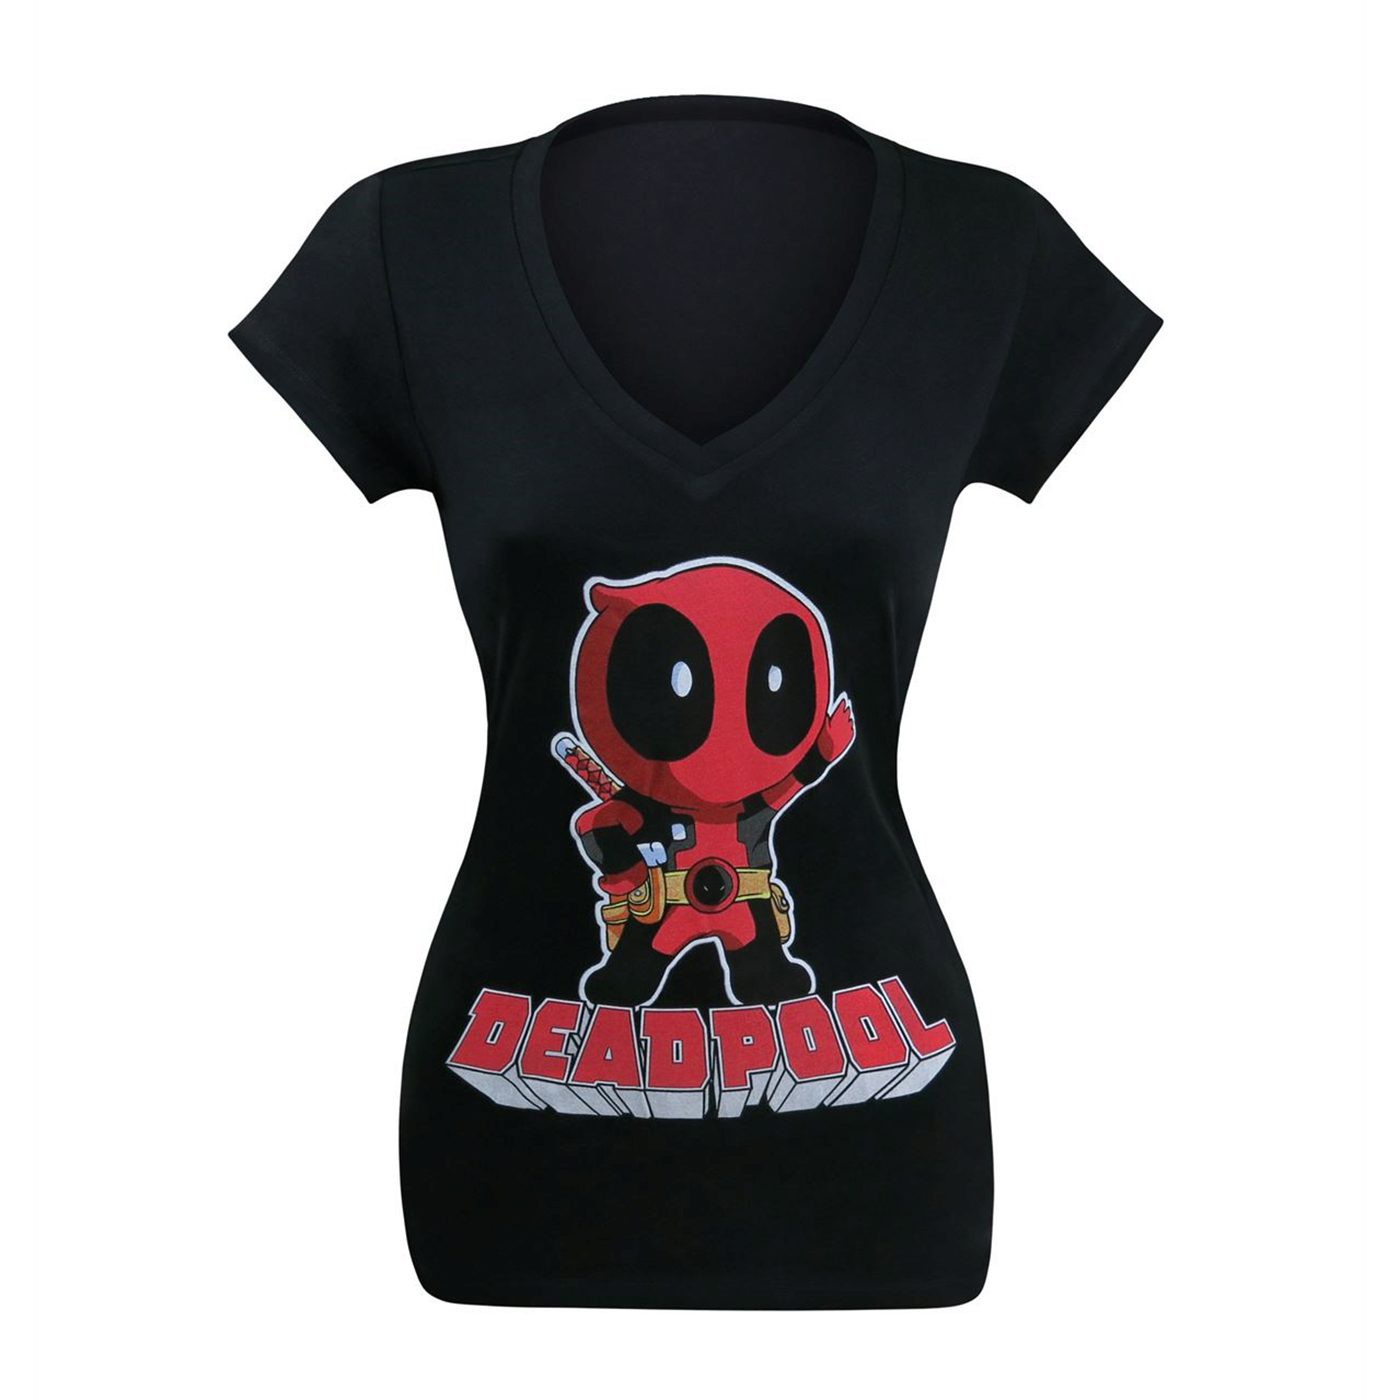 Deadpool Hey There Women's V-Neck T-Shirt